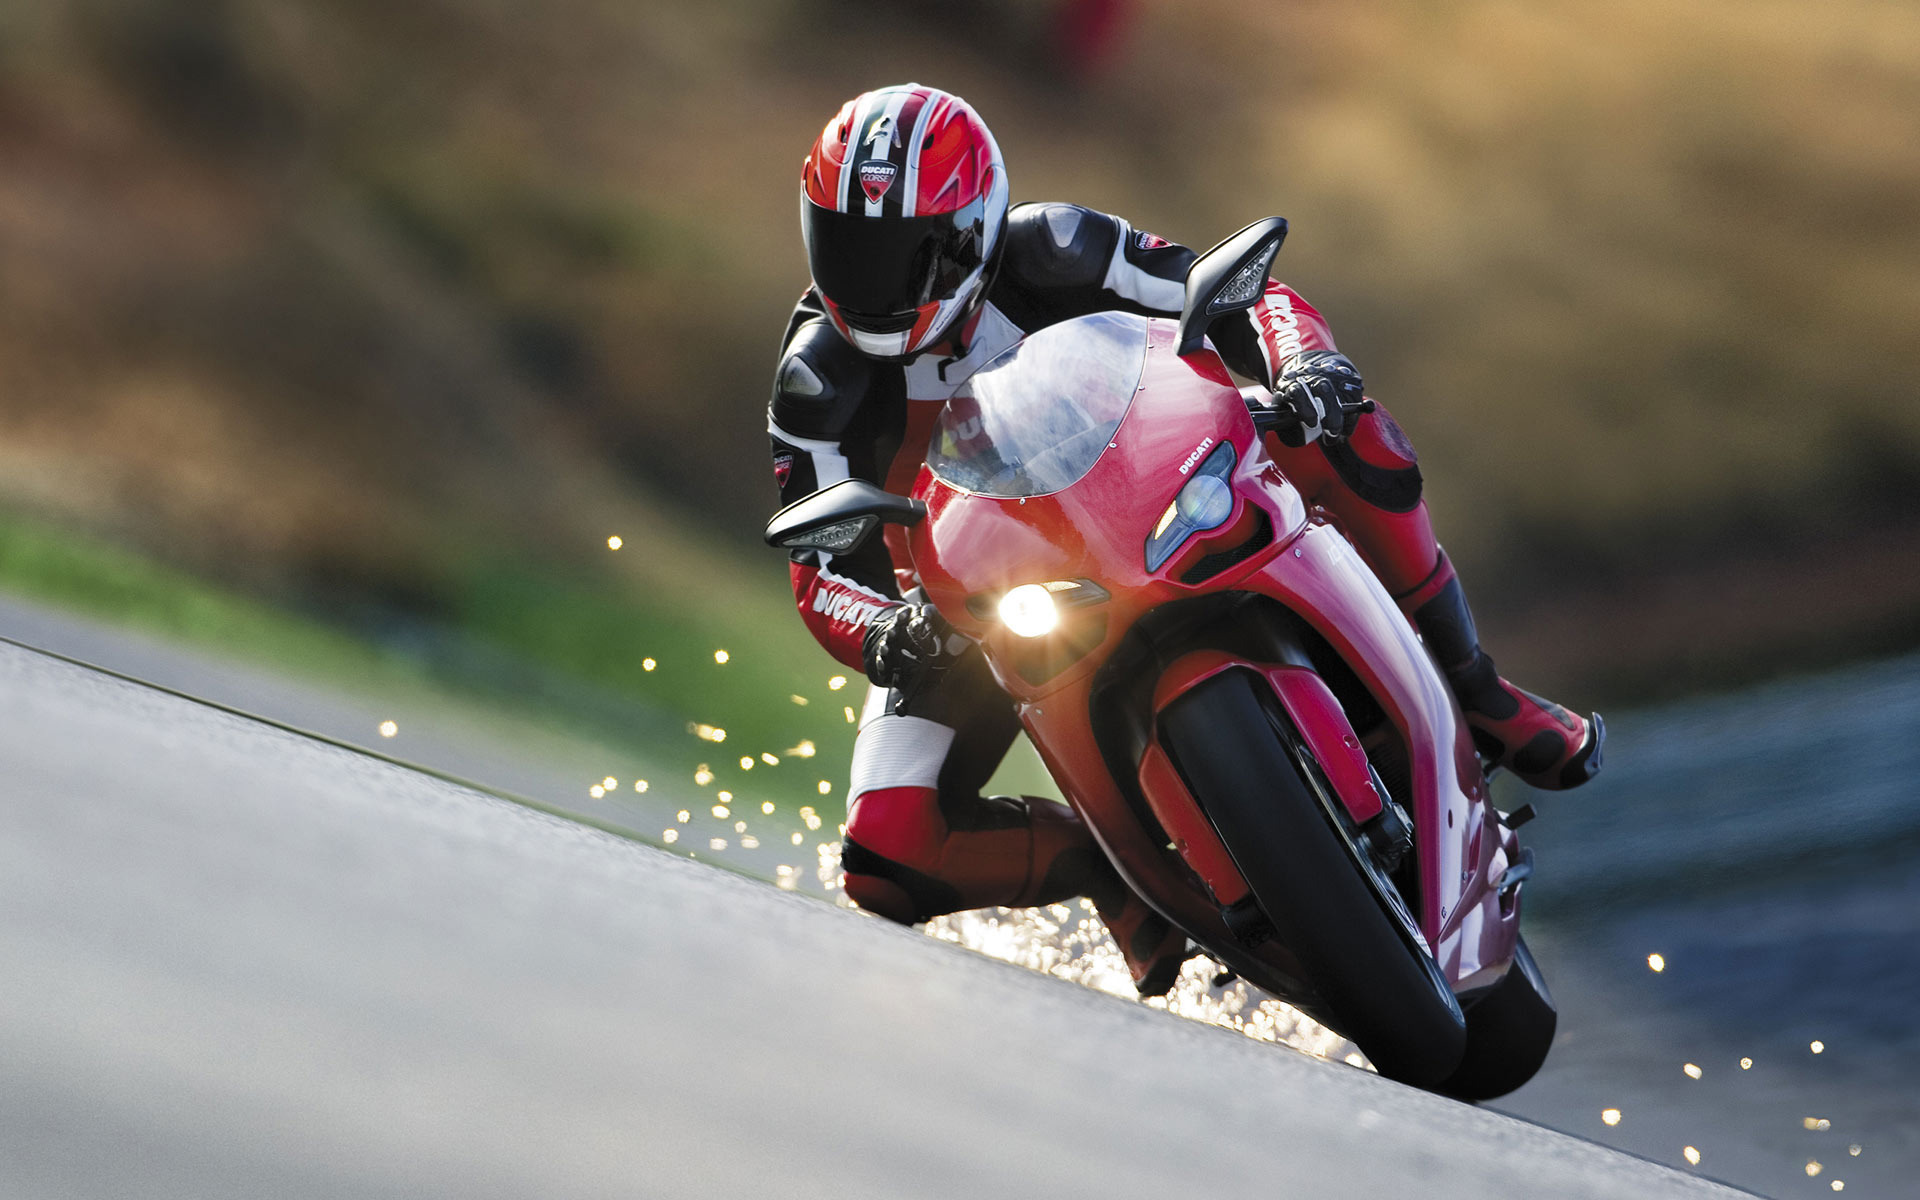 Moto bike racing. Ducati 1098. Мотоцикл гонщика. Гонка на мотоциклах. Мотоциклист на скорости.